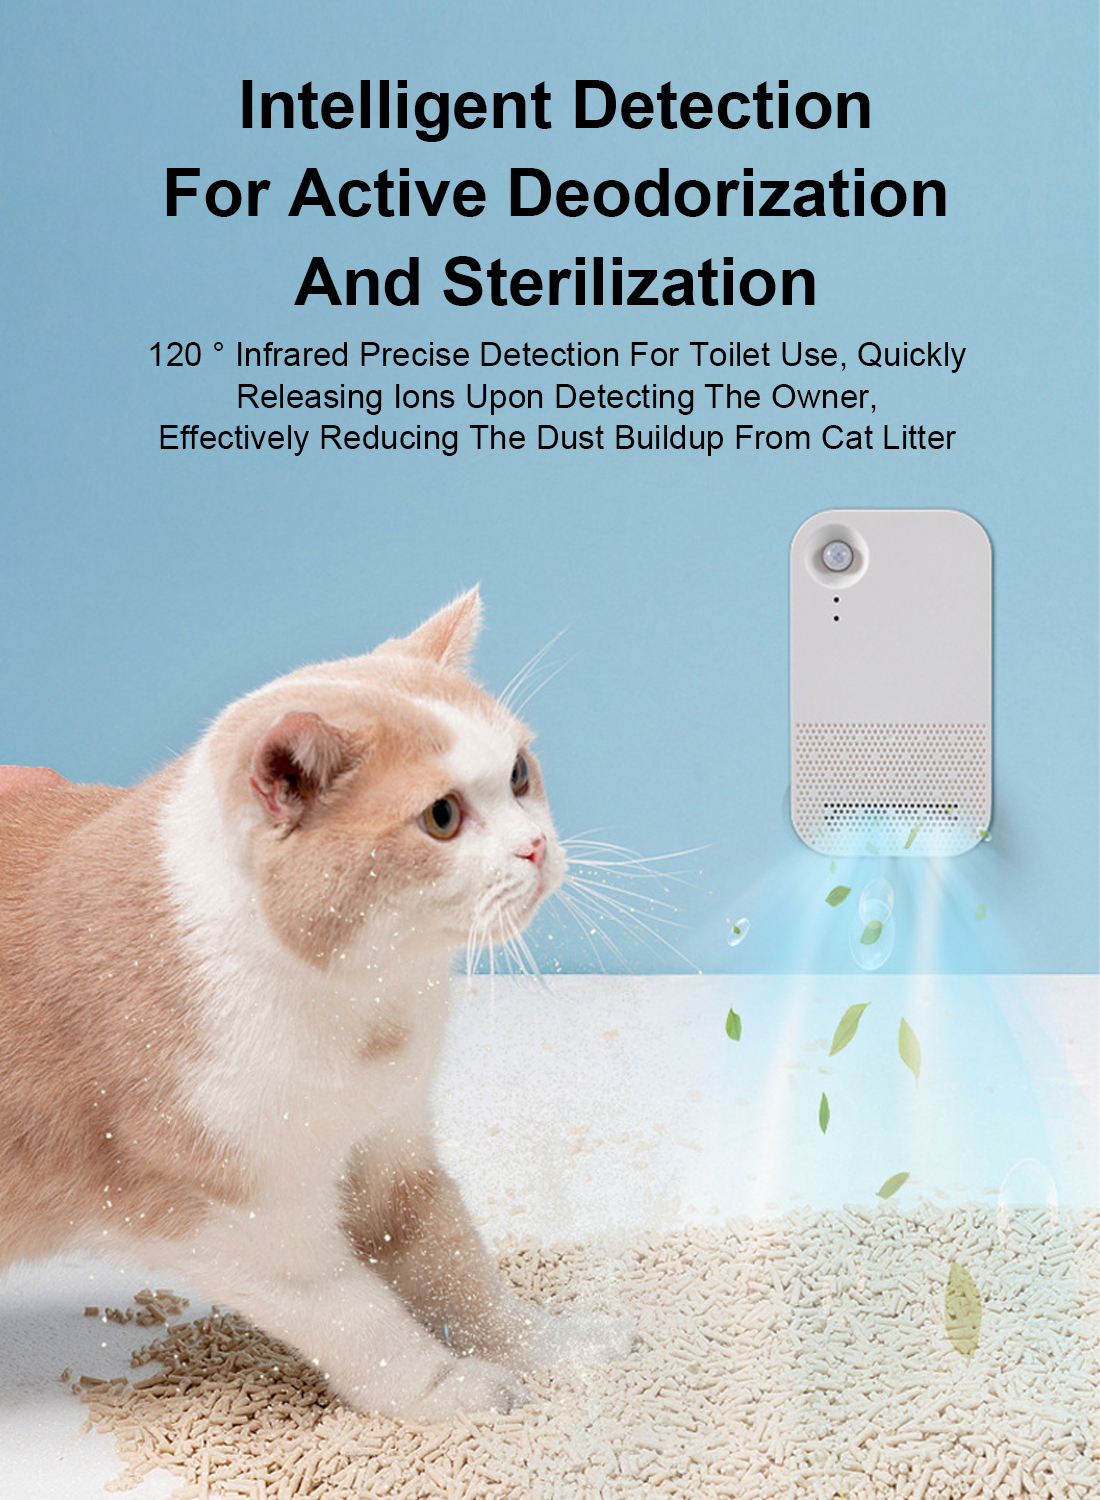 Household Air Purifier, Pet Litter Box, Odor Removal, Induction Sterilization, Cat Deodorizer